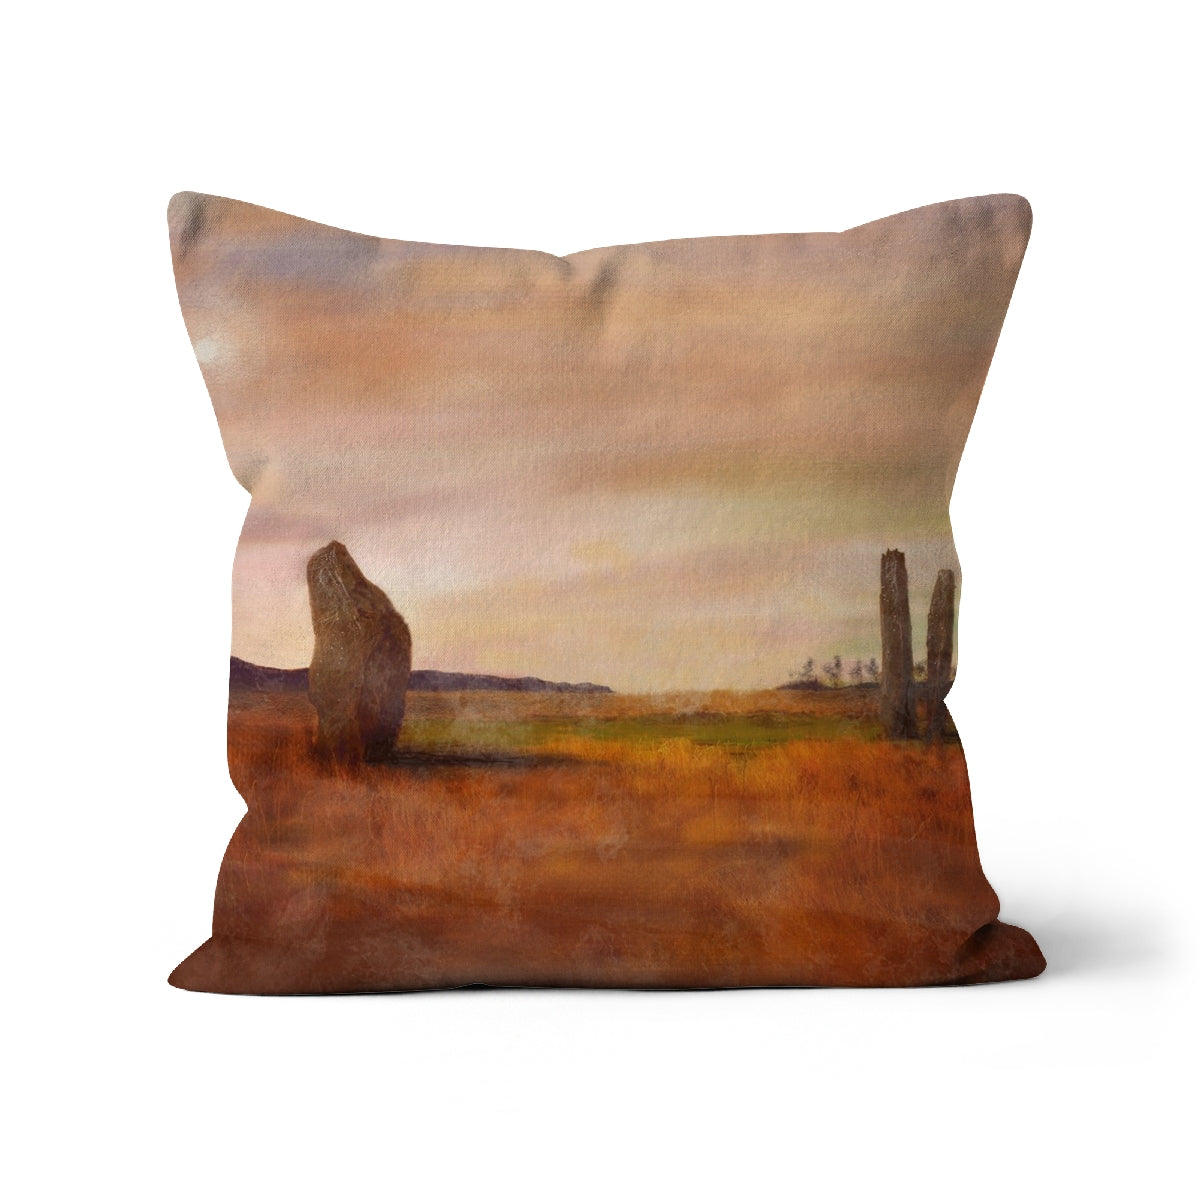 Machrie Moor Arran Art Gifts Cushion-Cushions-Arran Art Gallery-Linen-12"x12"-Paintings, Prints, Homeware, Art Gifts From Scotland By Scottish Artist Kevin Hunter